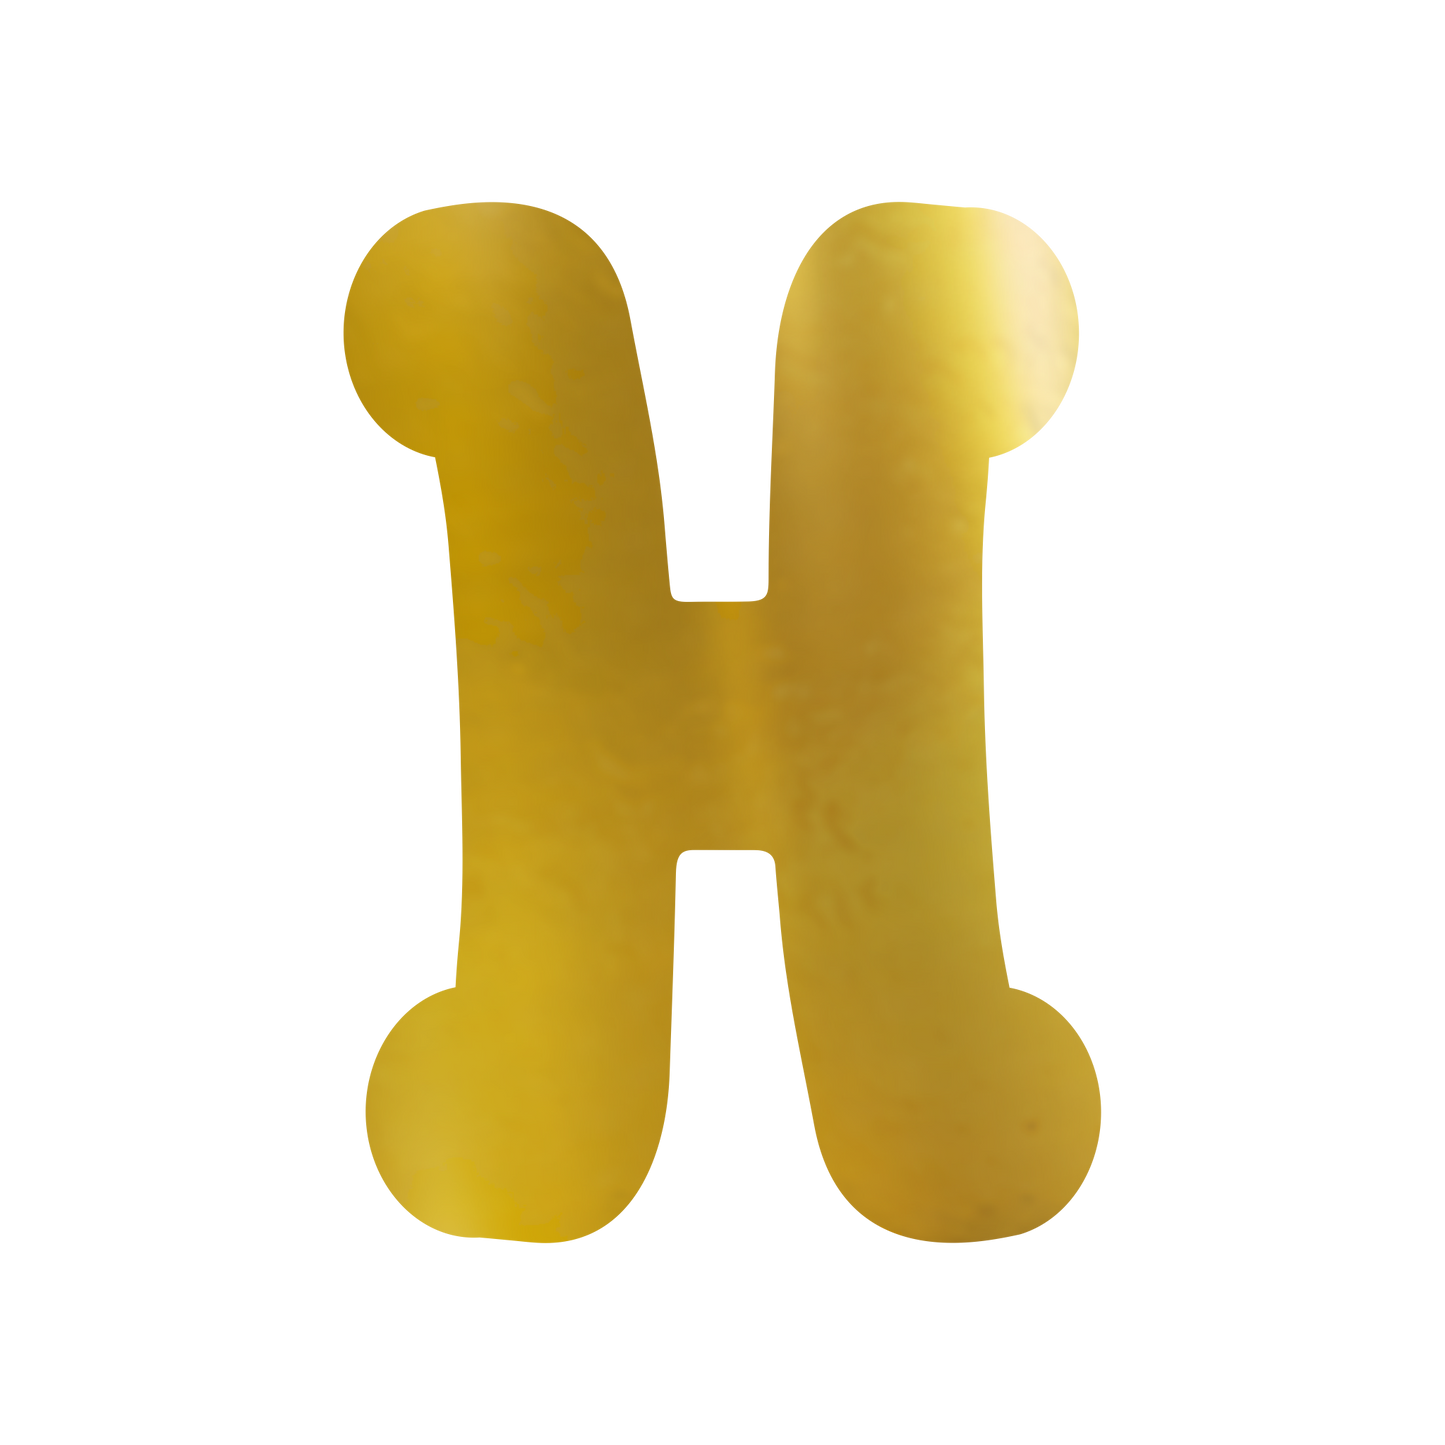 Comemoratio H Letra de Papel Metalizada 15,3 cm Dourada - G2 - 01 un.